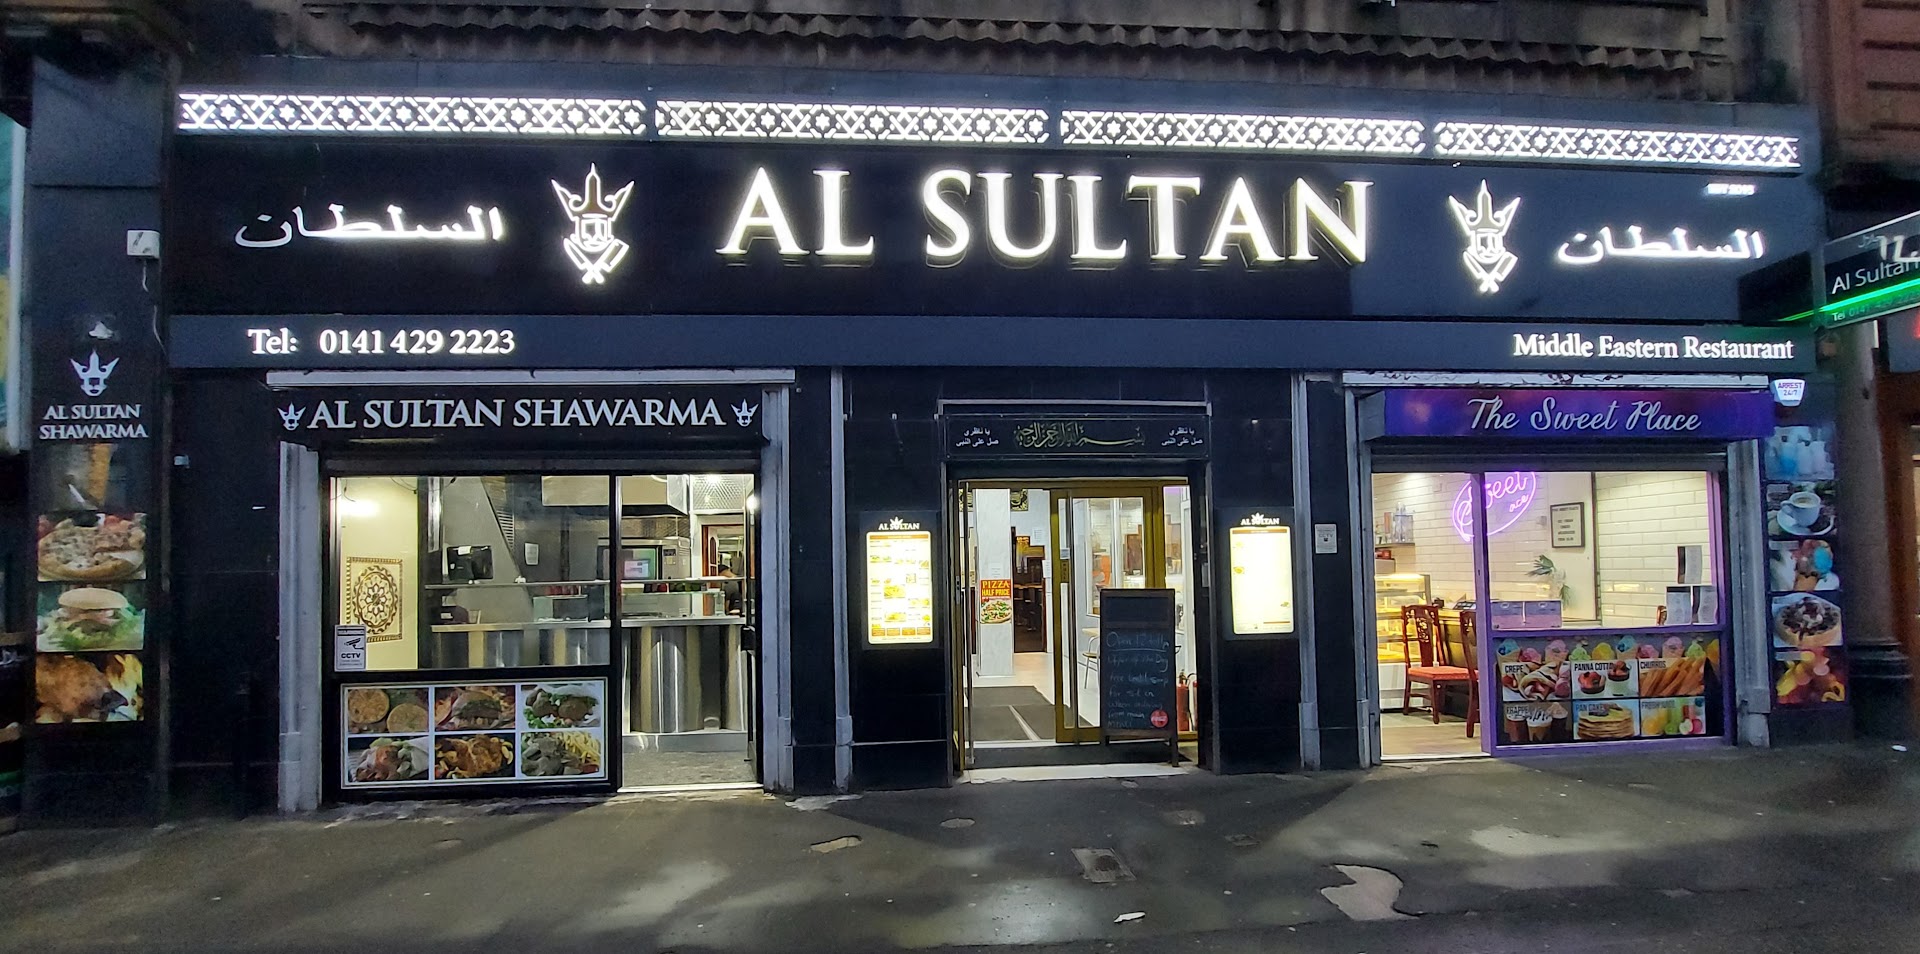 Al Sultan: Exquisite Middle Eastern Restaurant in Glasgow